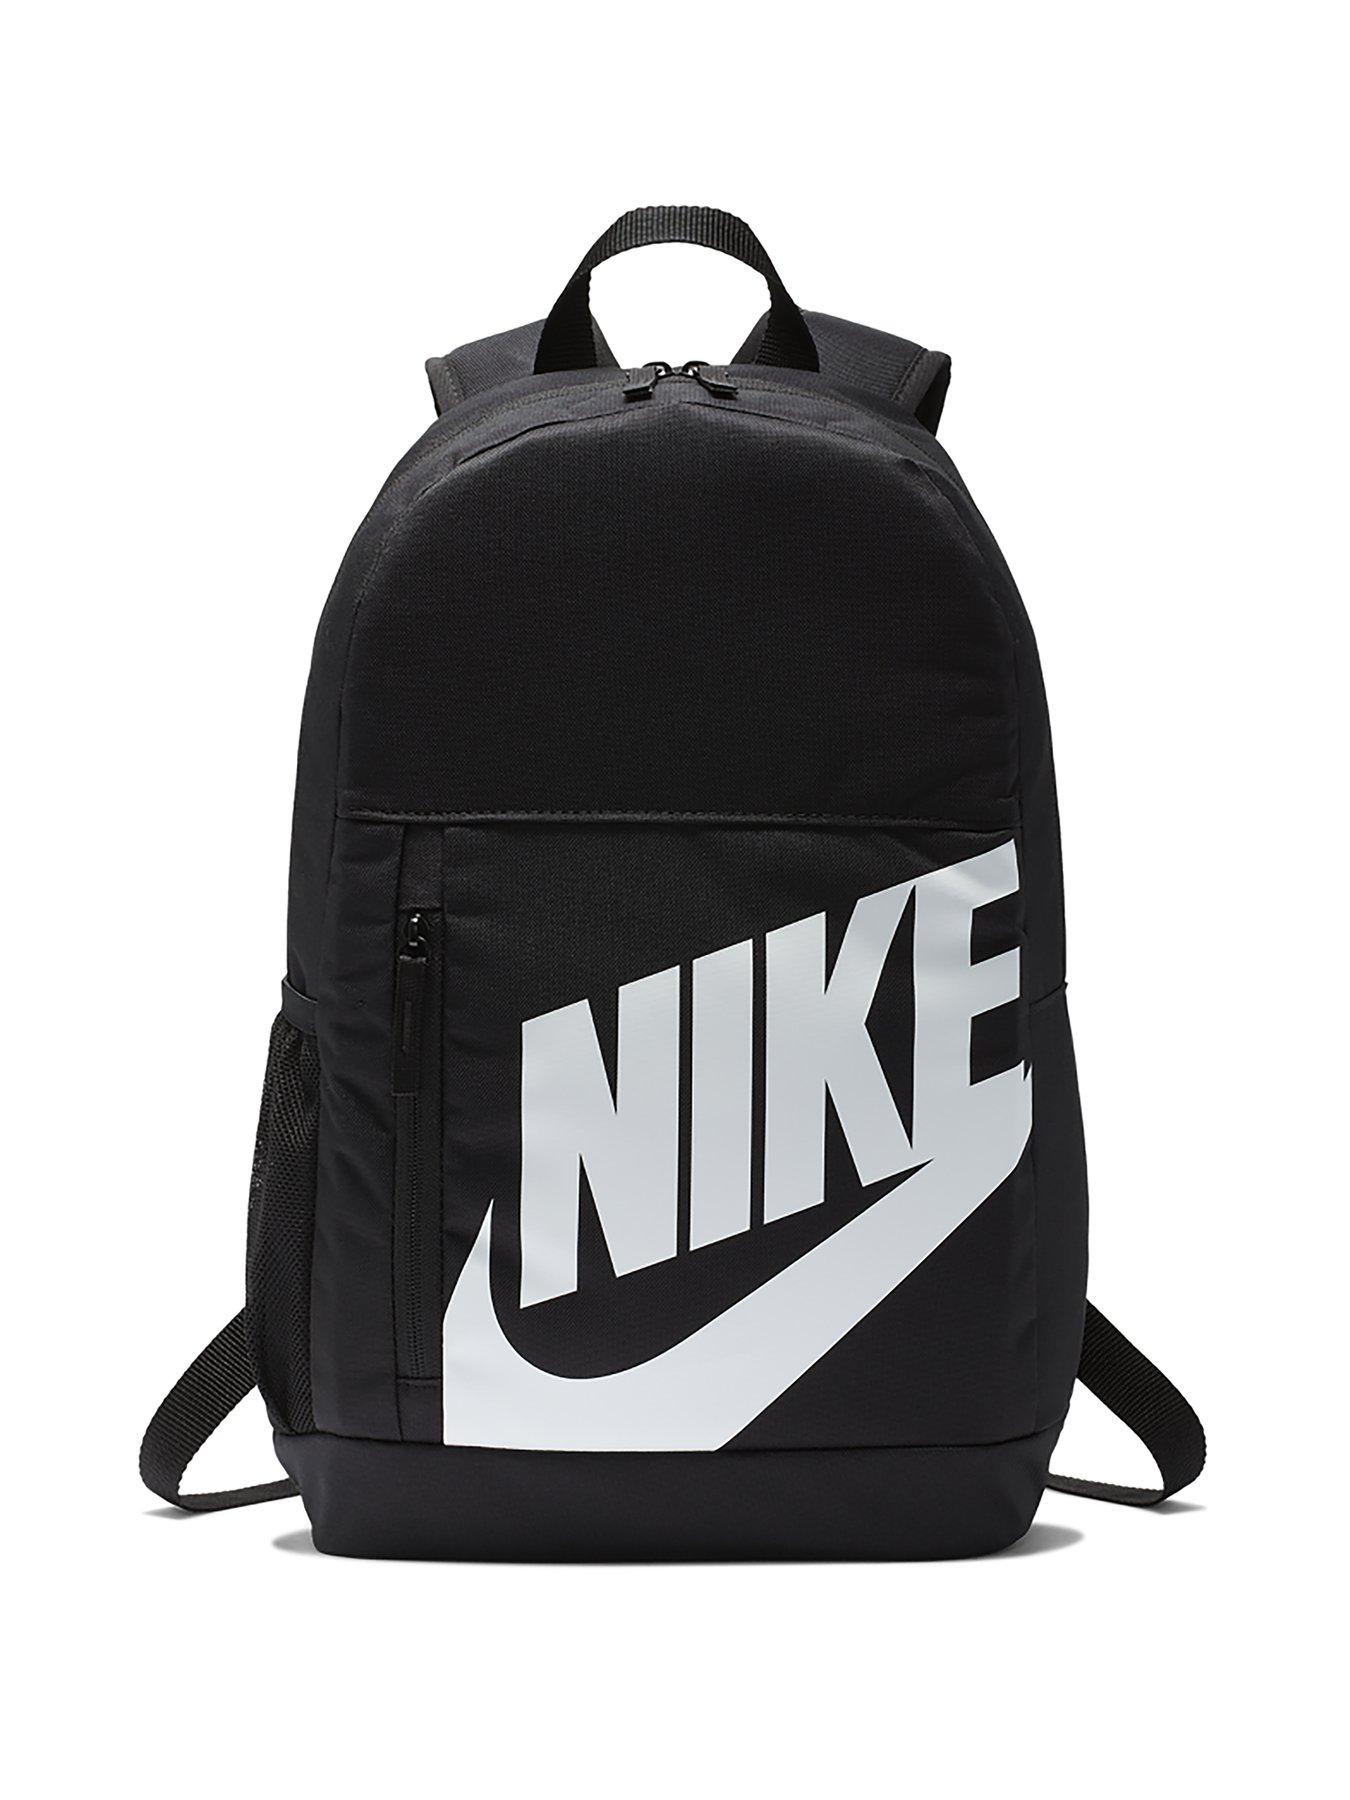 Nike Kids Elemental Backpack with FREE 